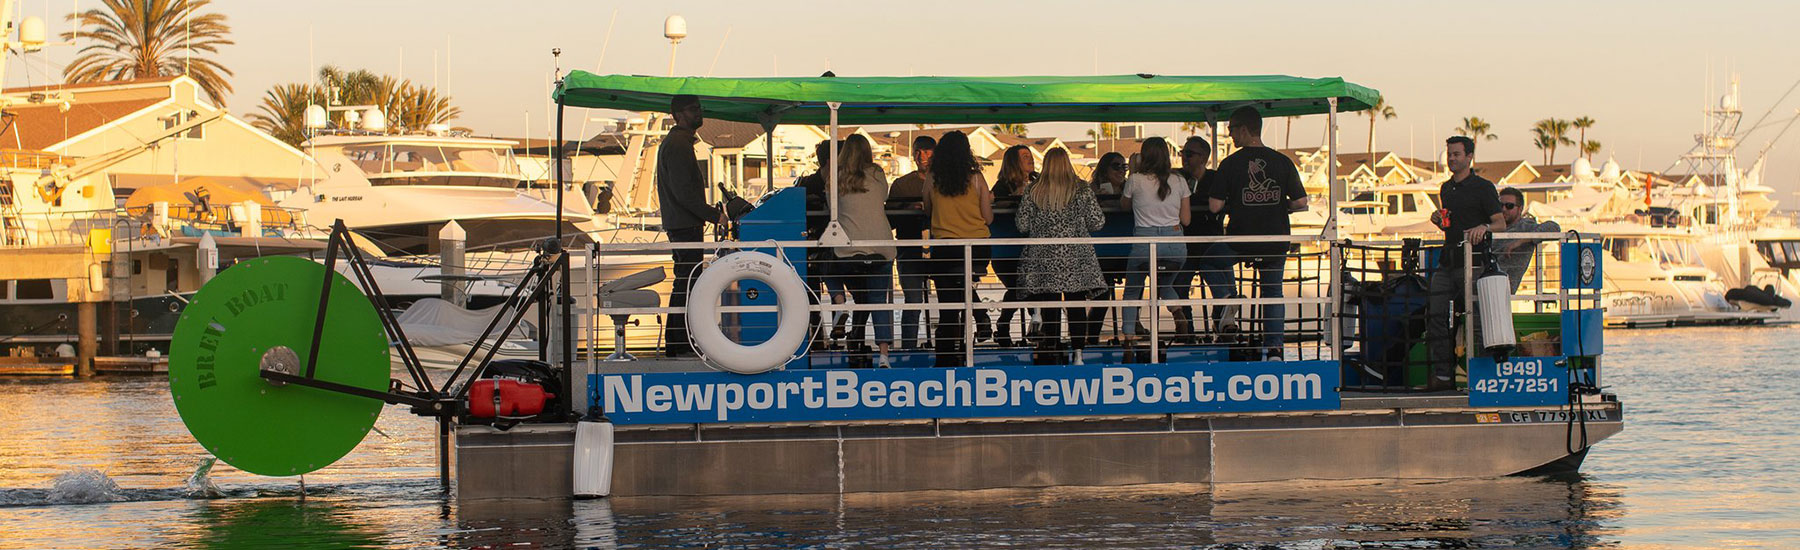 Newport Beach Brew Boat | Fun Harbor Party Boat Tours